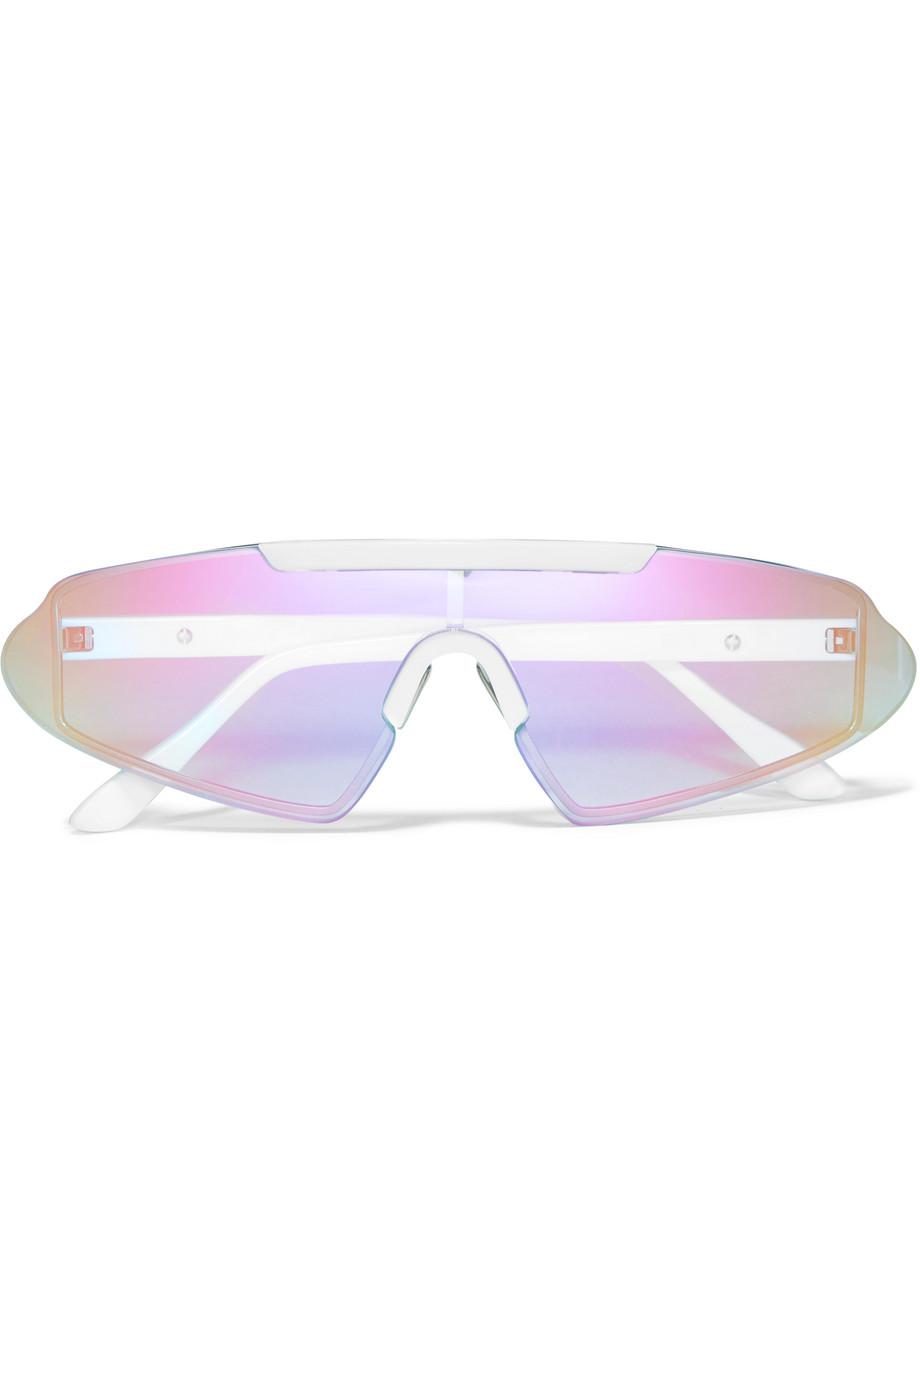 Acne Studios Bornt D-frame Acetate Sunglasses in White - Lyst